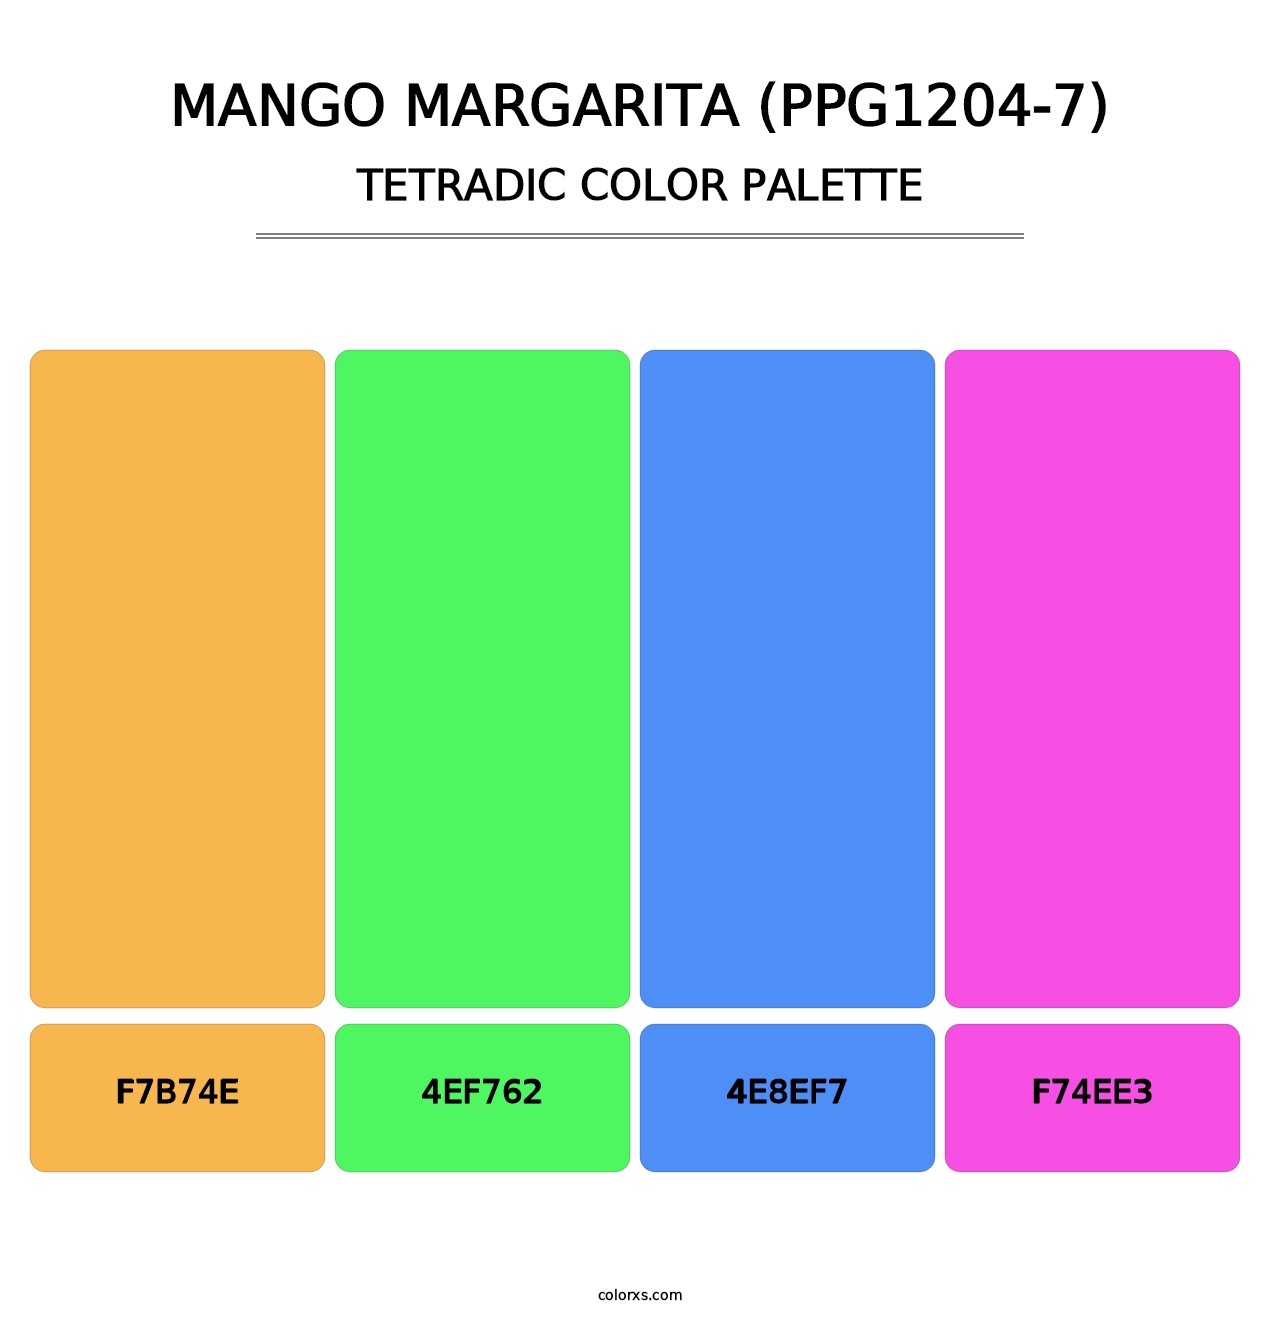 Mango Margarita (PPG1204-7) - Tetradic Color Palette